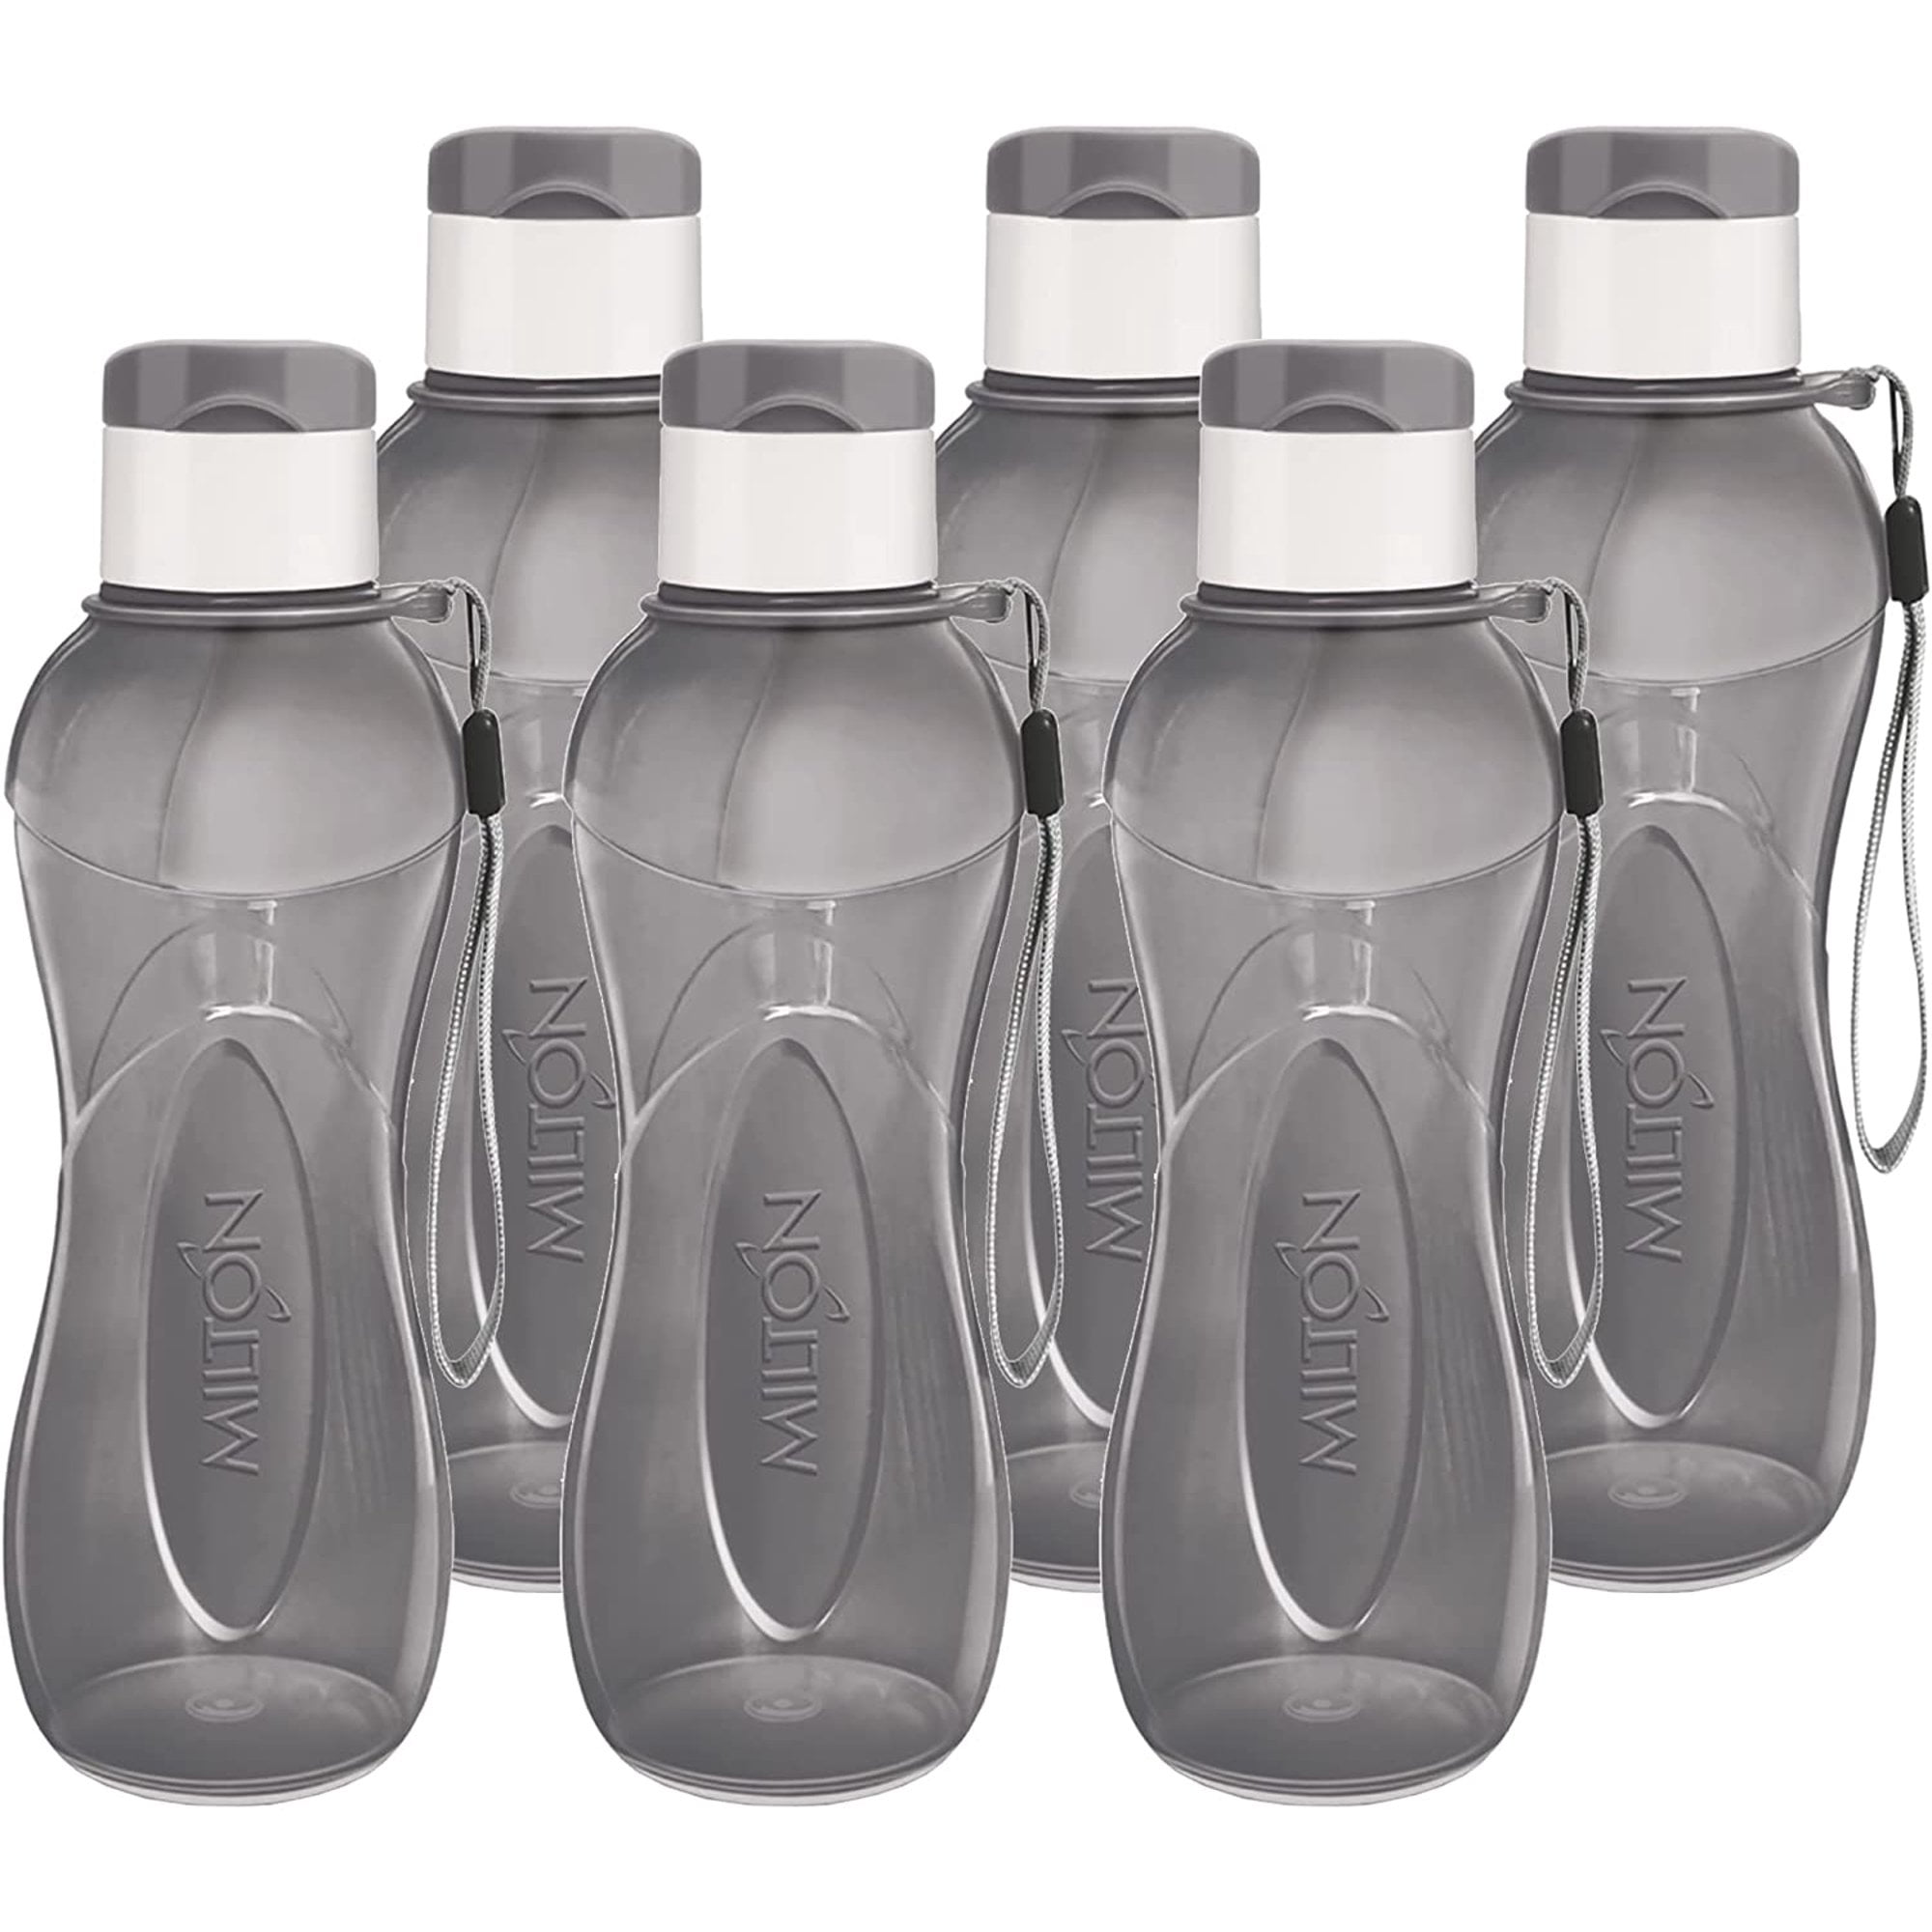 MILTON Water Bottle Kids Reusable Leakproof 12 Oz Plastic Wide